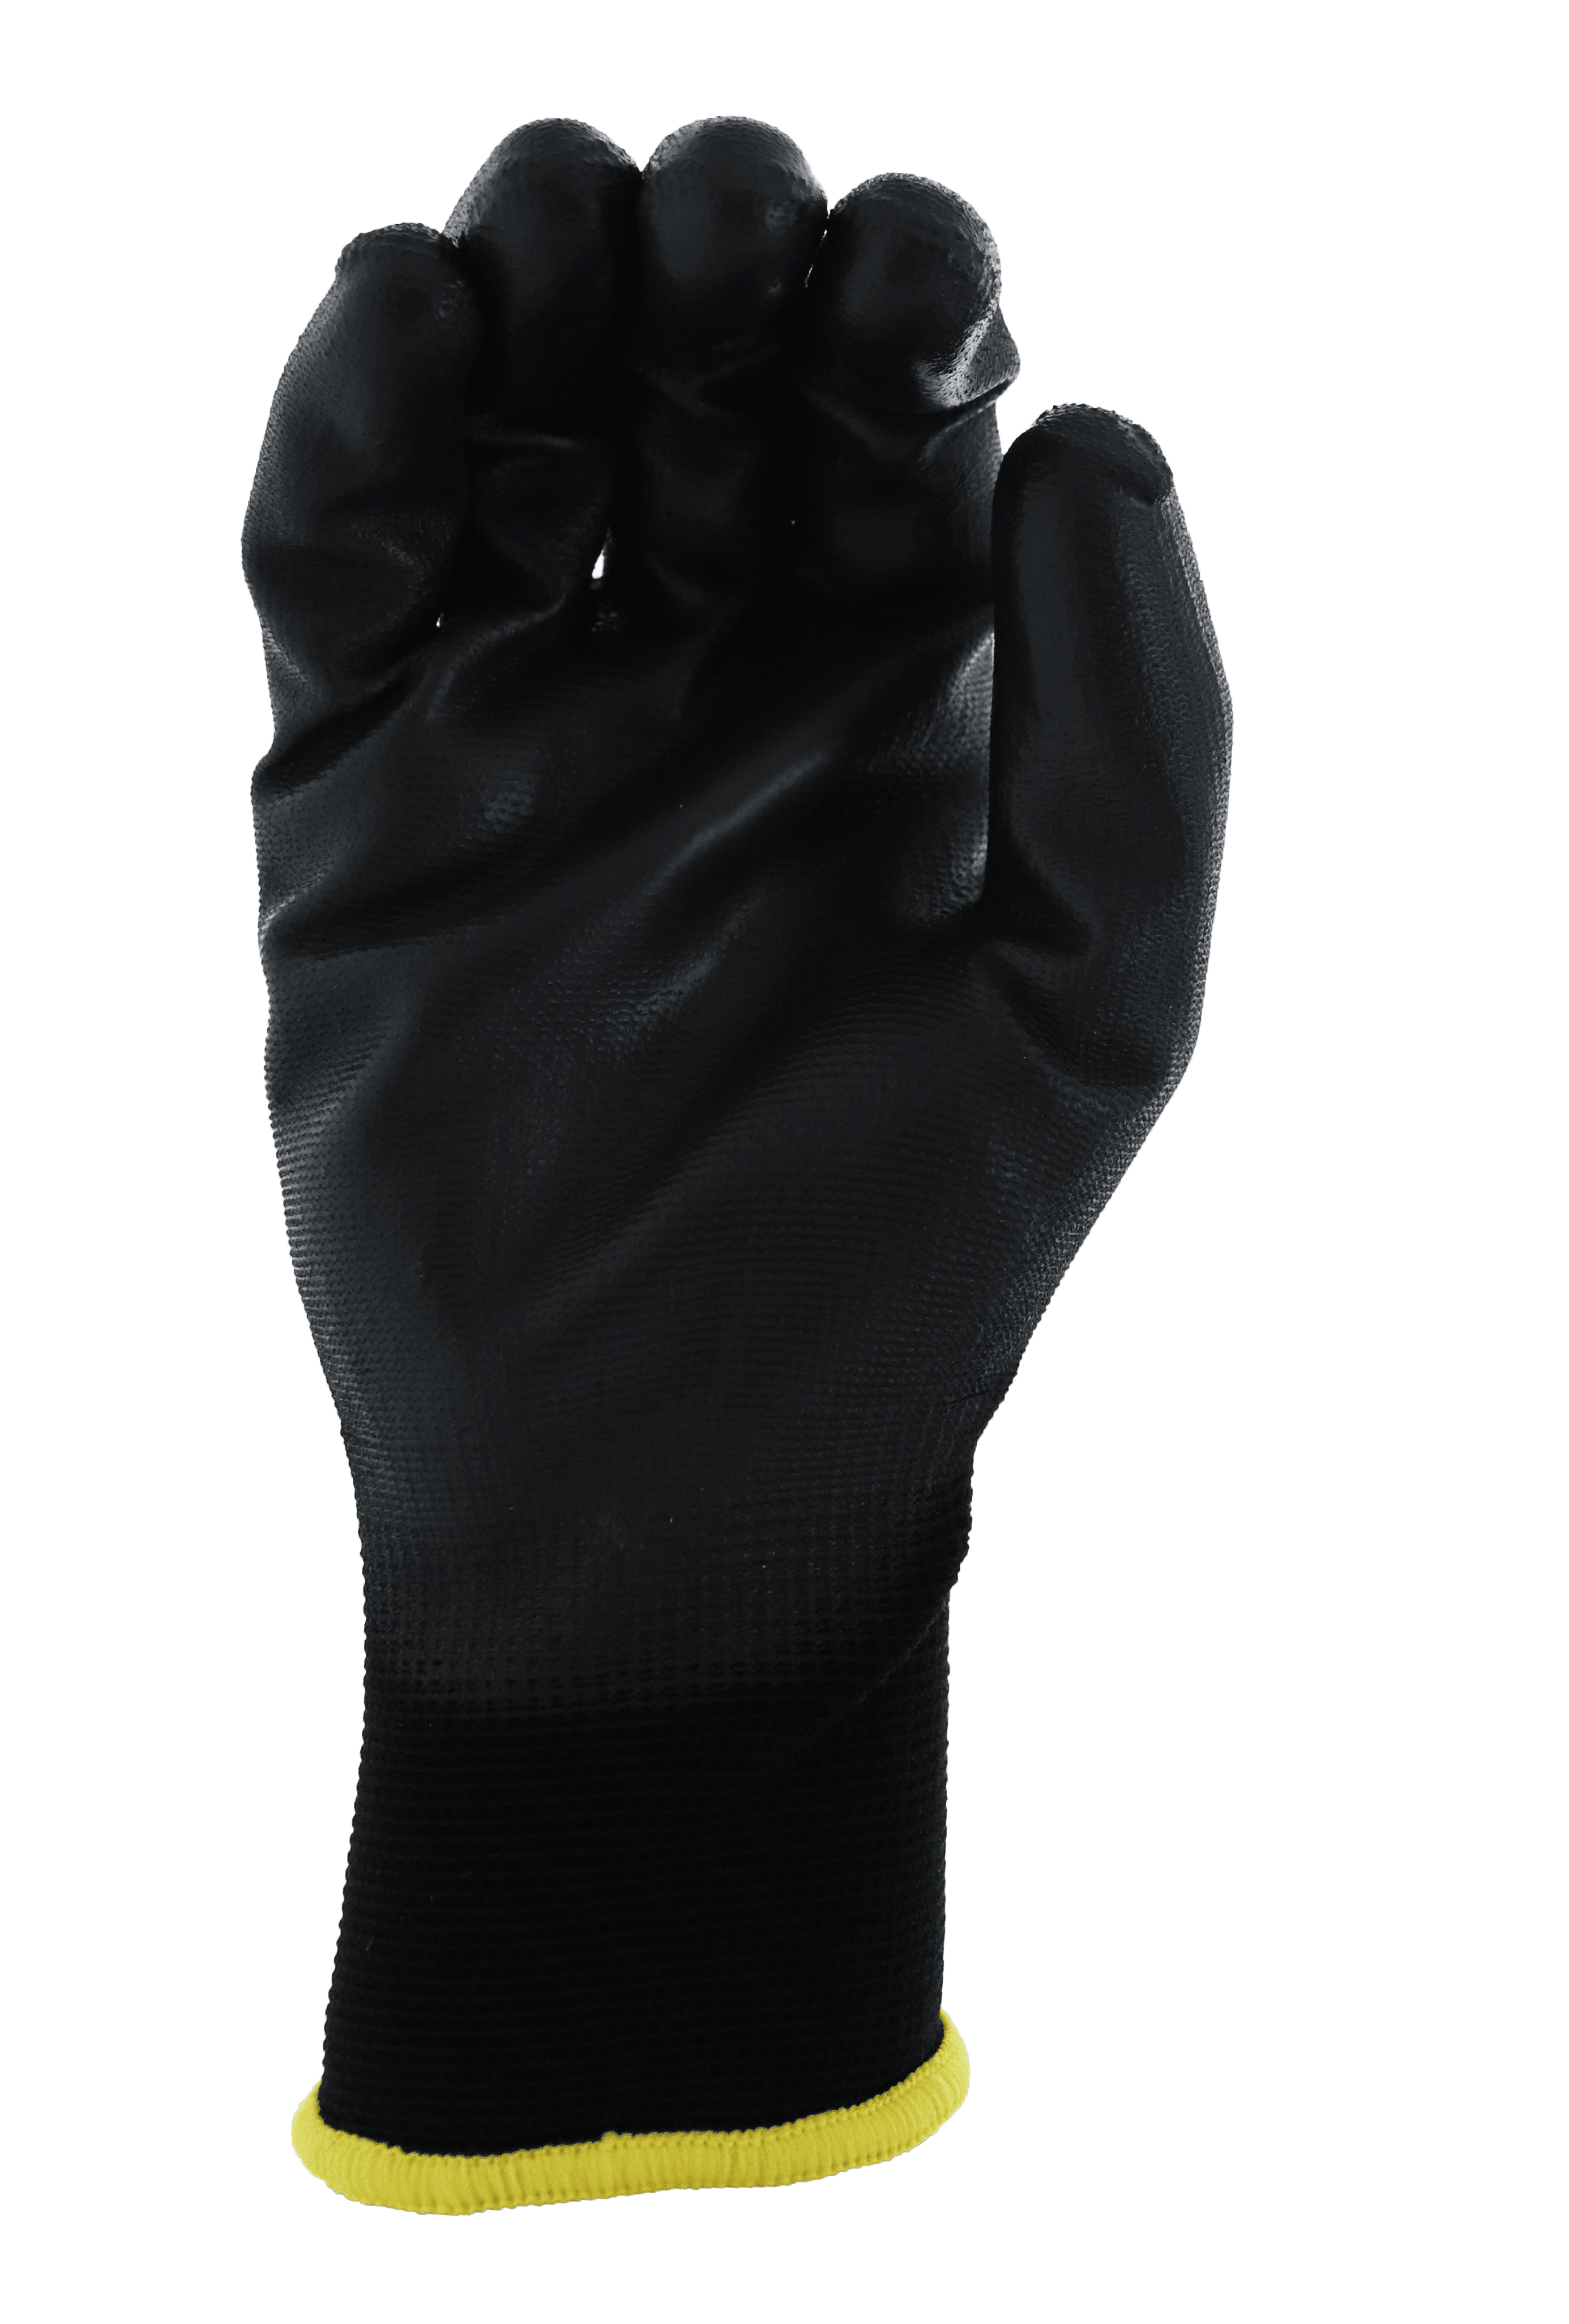  Gorilla Grip 25055-26 Slip Resistant All Purpose Work Gloves, Size: XX-Large